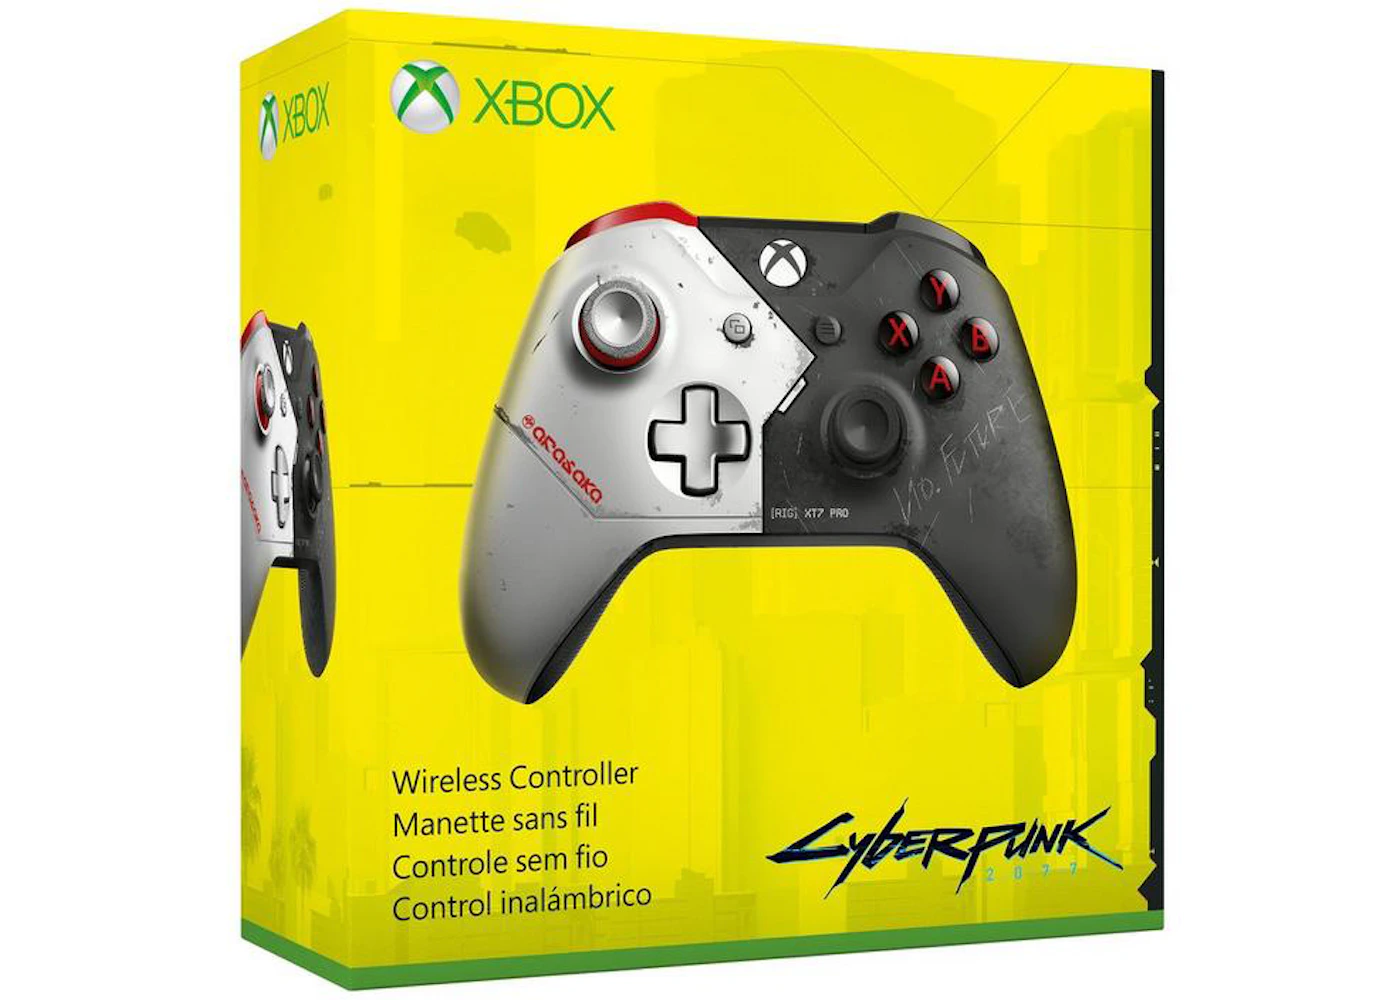 Xbox Wireless Controller – Cyberpunk Limited Edition |